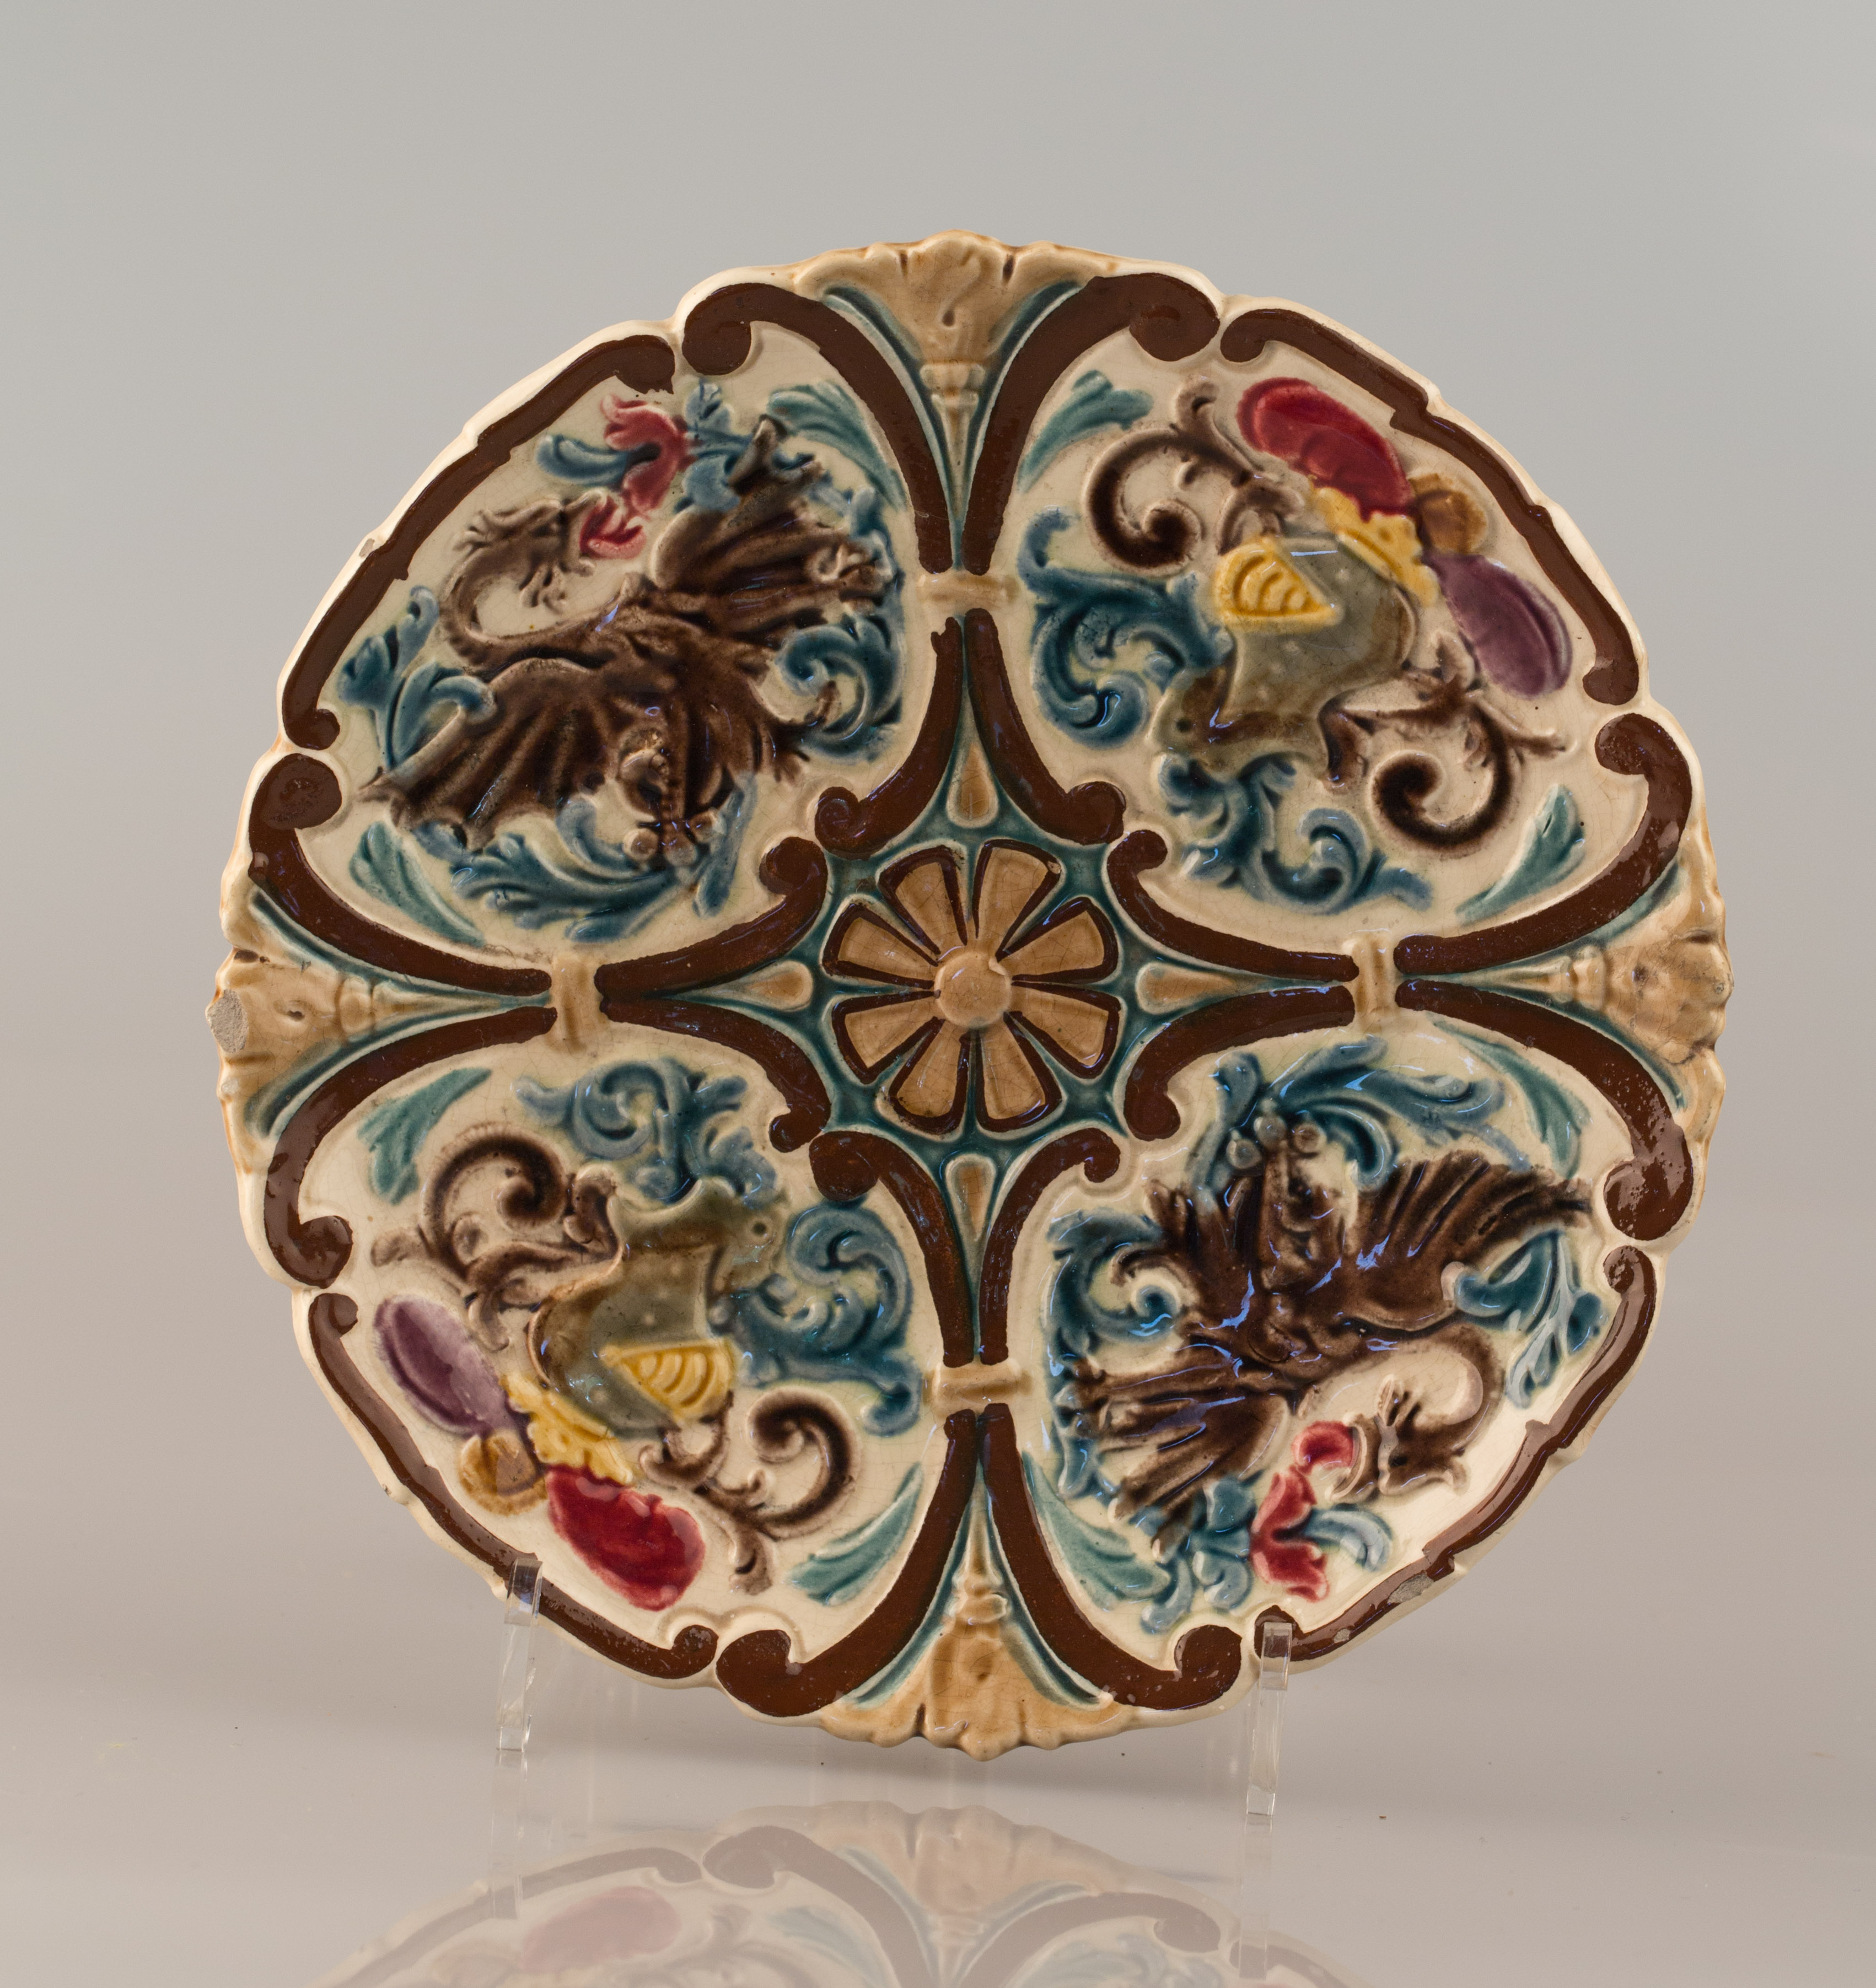 20140707 Radkersburg - Decorative plates (Gombosz collection) - H3307